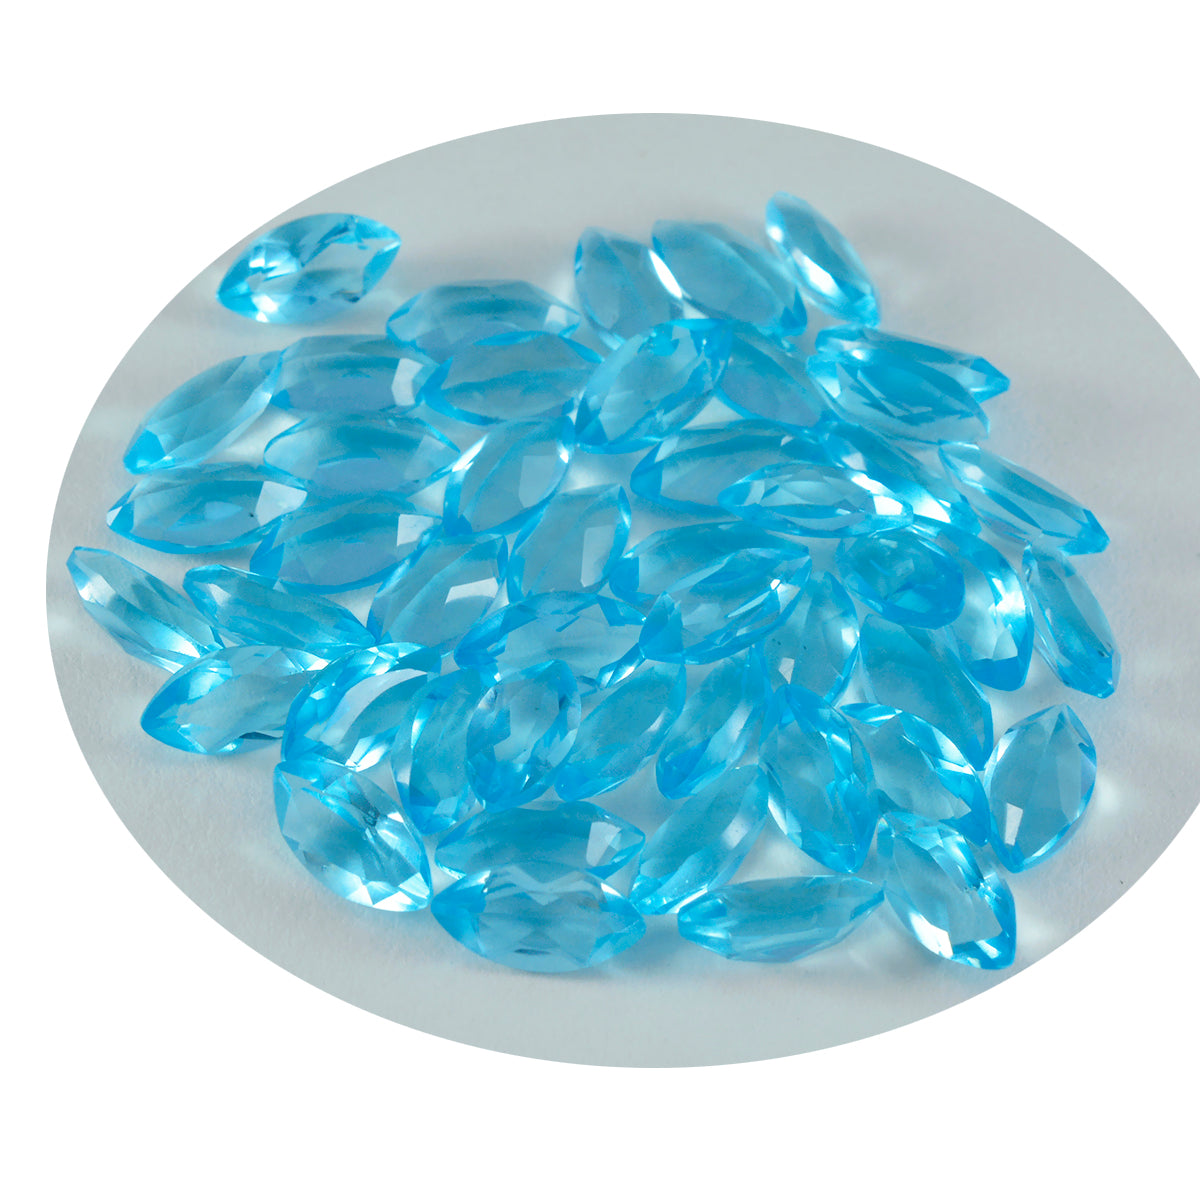 Riyogems 1PC Blue Topaz CZ Faceted 5x10 mm Marquise Shape amazing Quality Gems